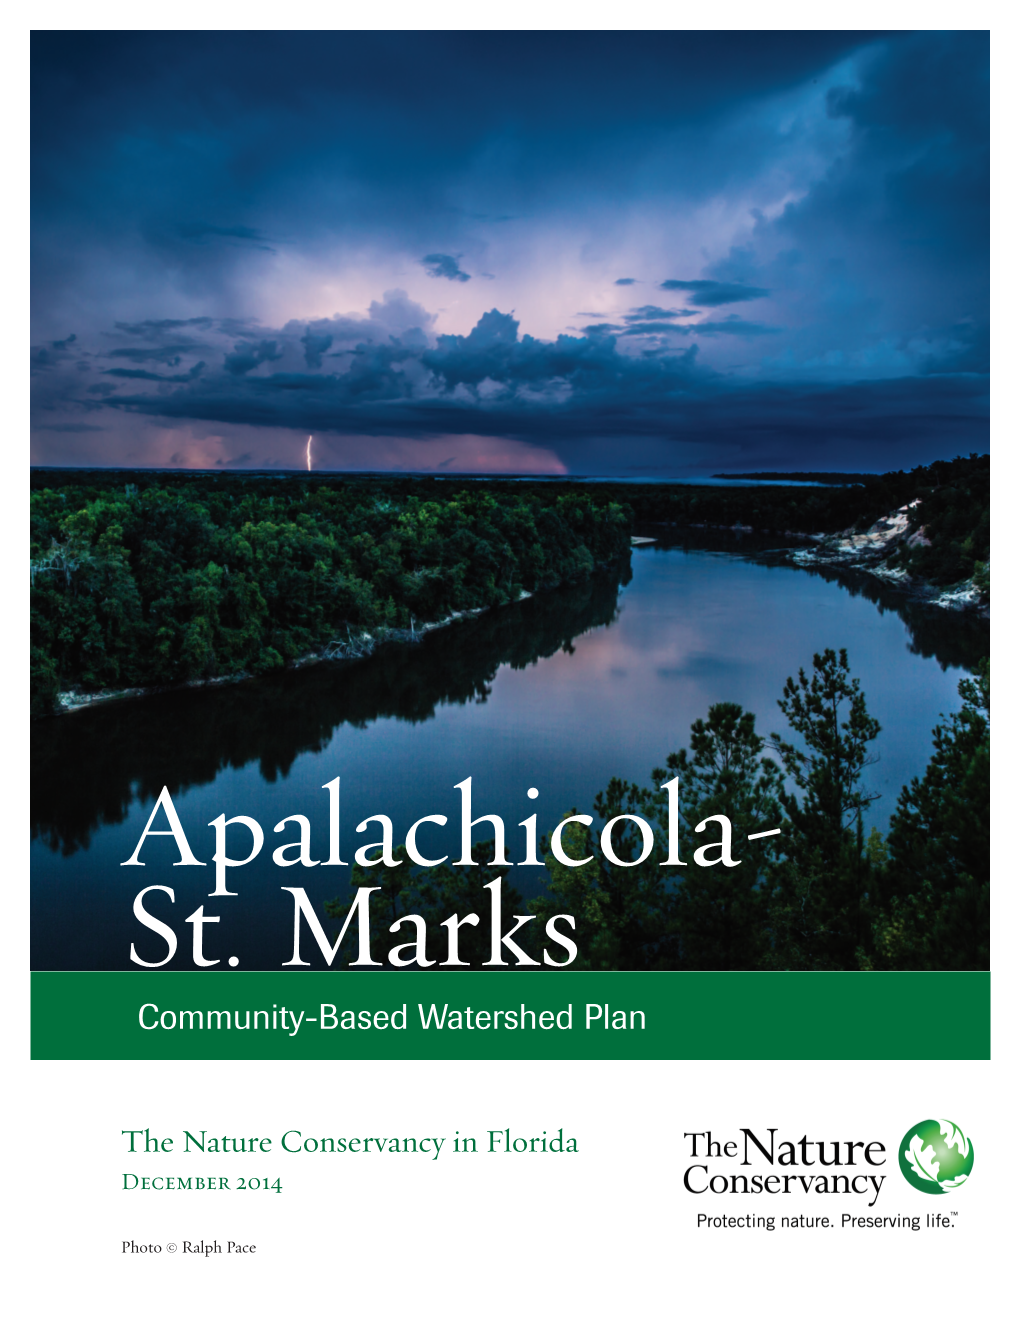 Apalachicola-St.Marks Community Based Watershed Plan